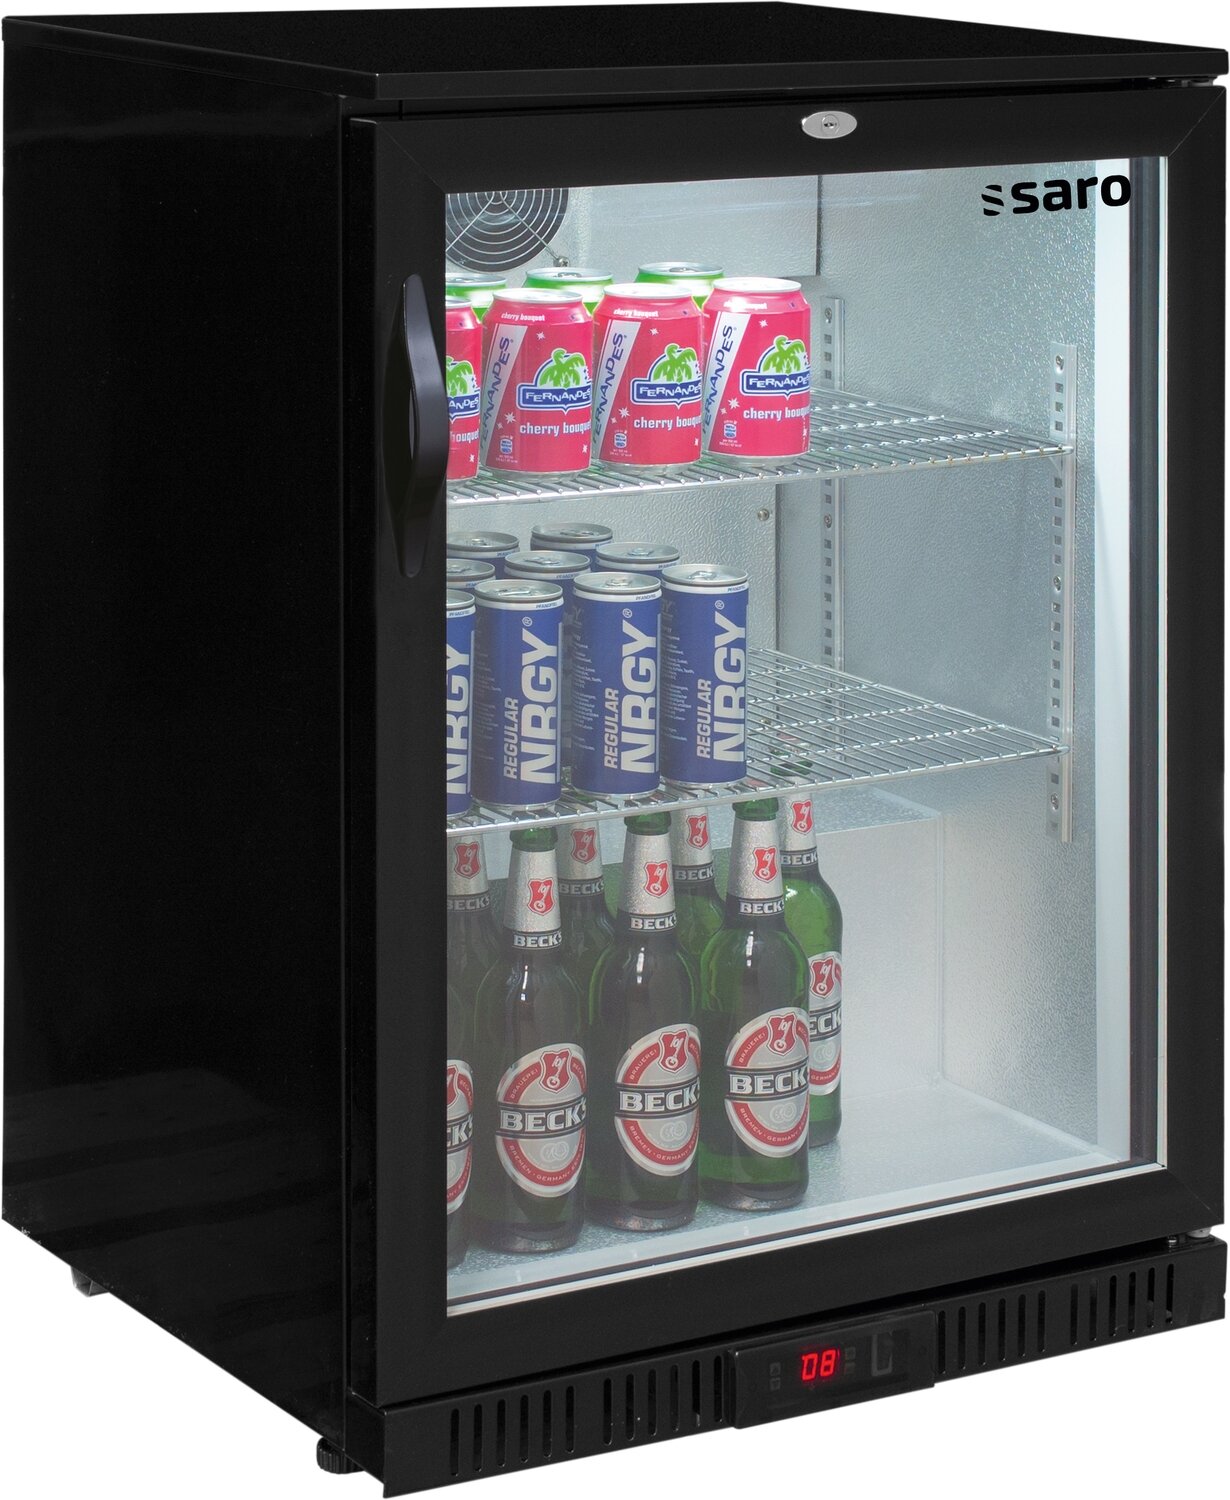 SARO Bar Cooler model BC 138